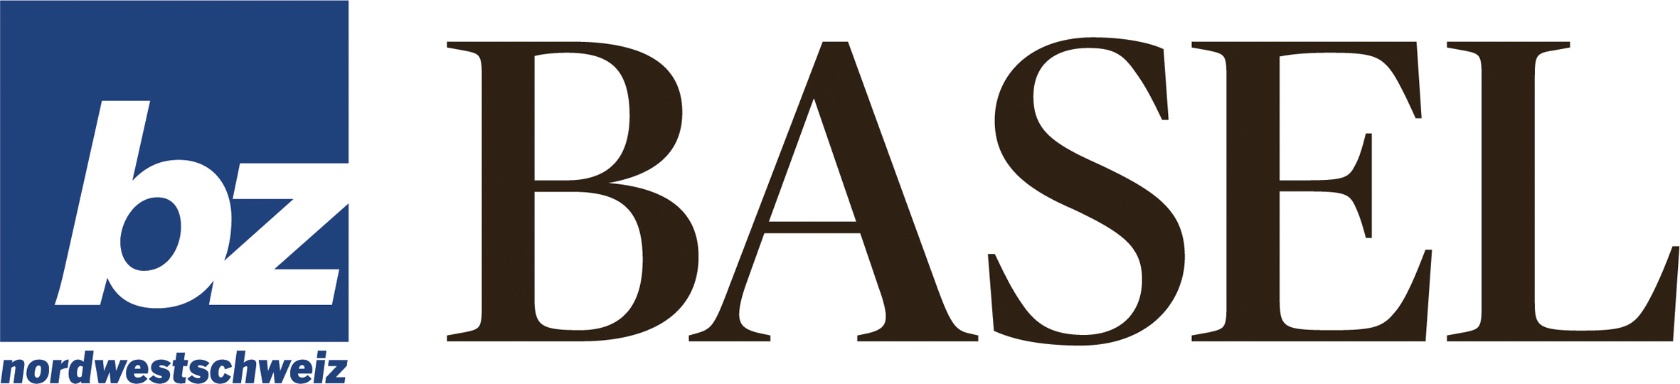 bz-basel-logo